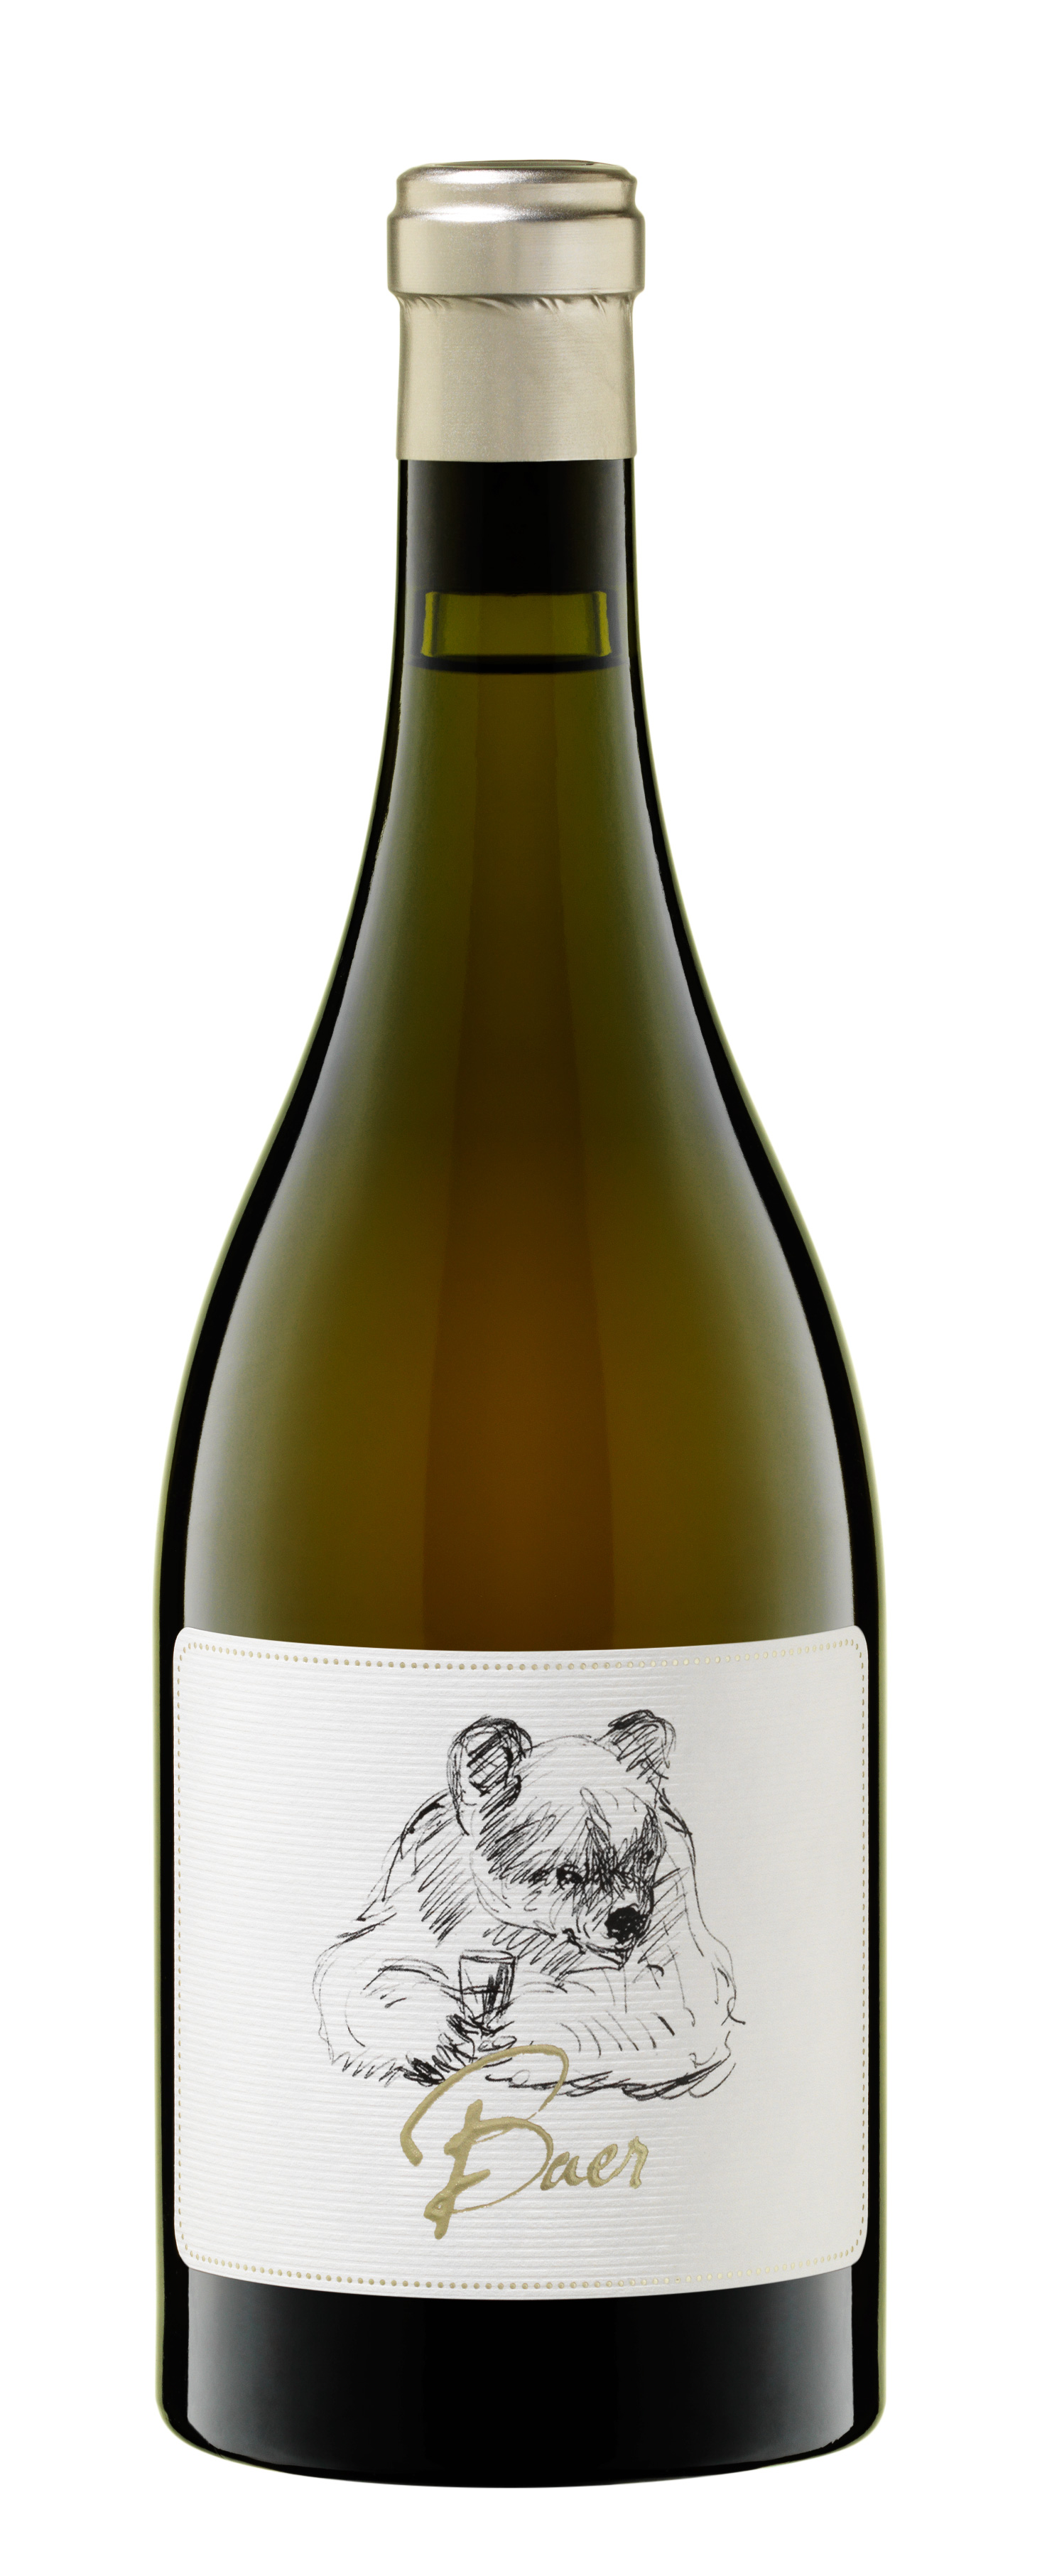 2018 Sauvignon Blanc Baer trocken 0,75 L - Weingut Oliver Zeter